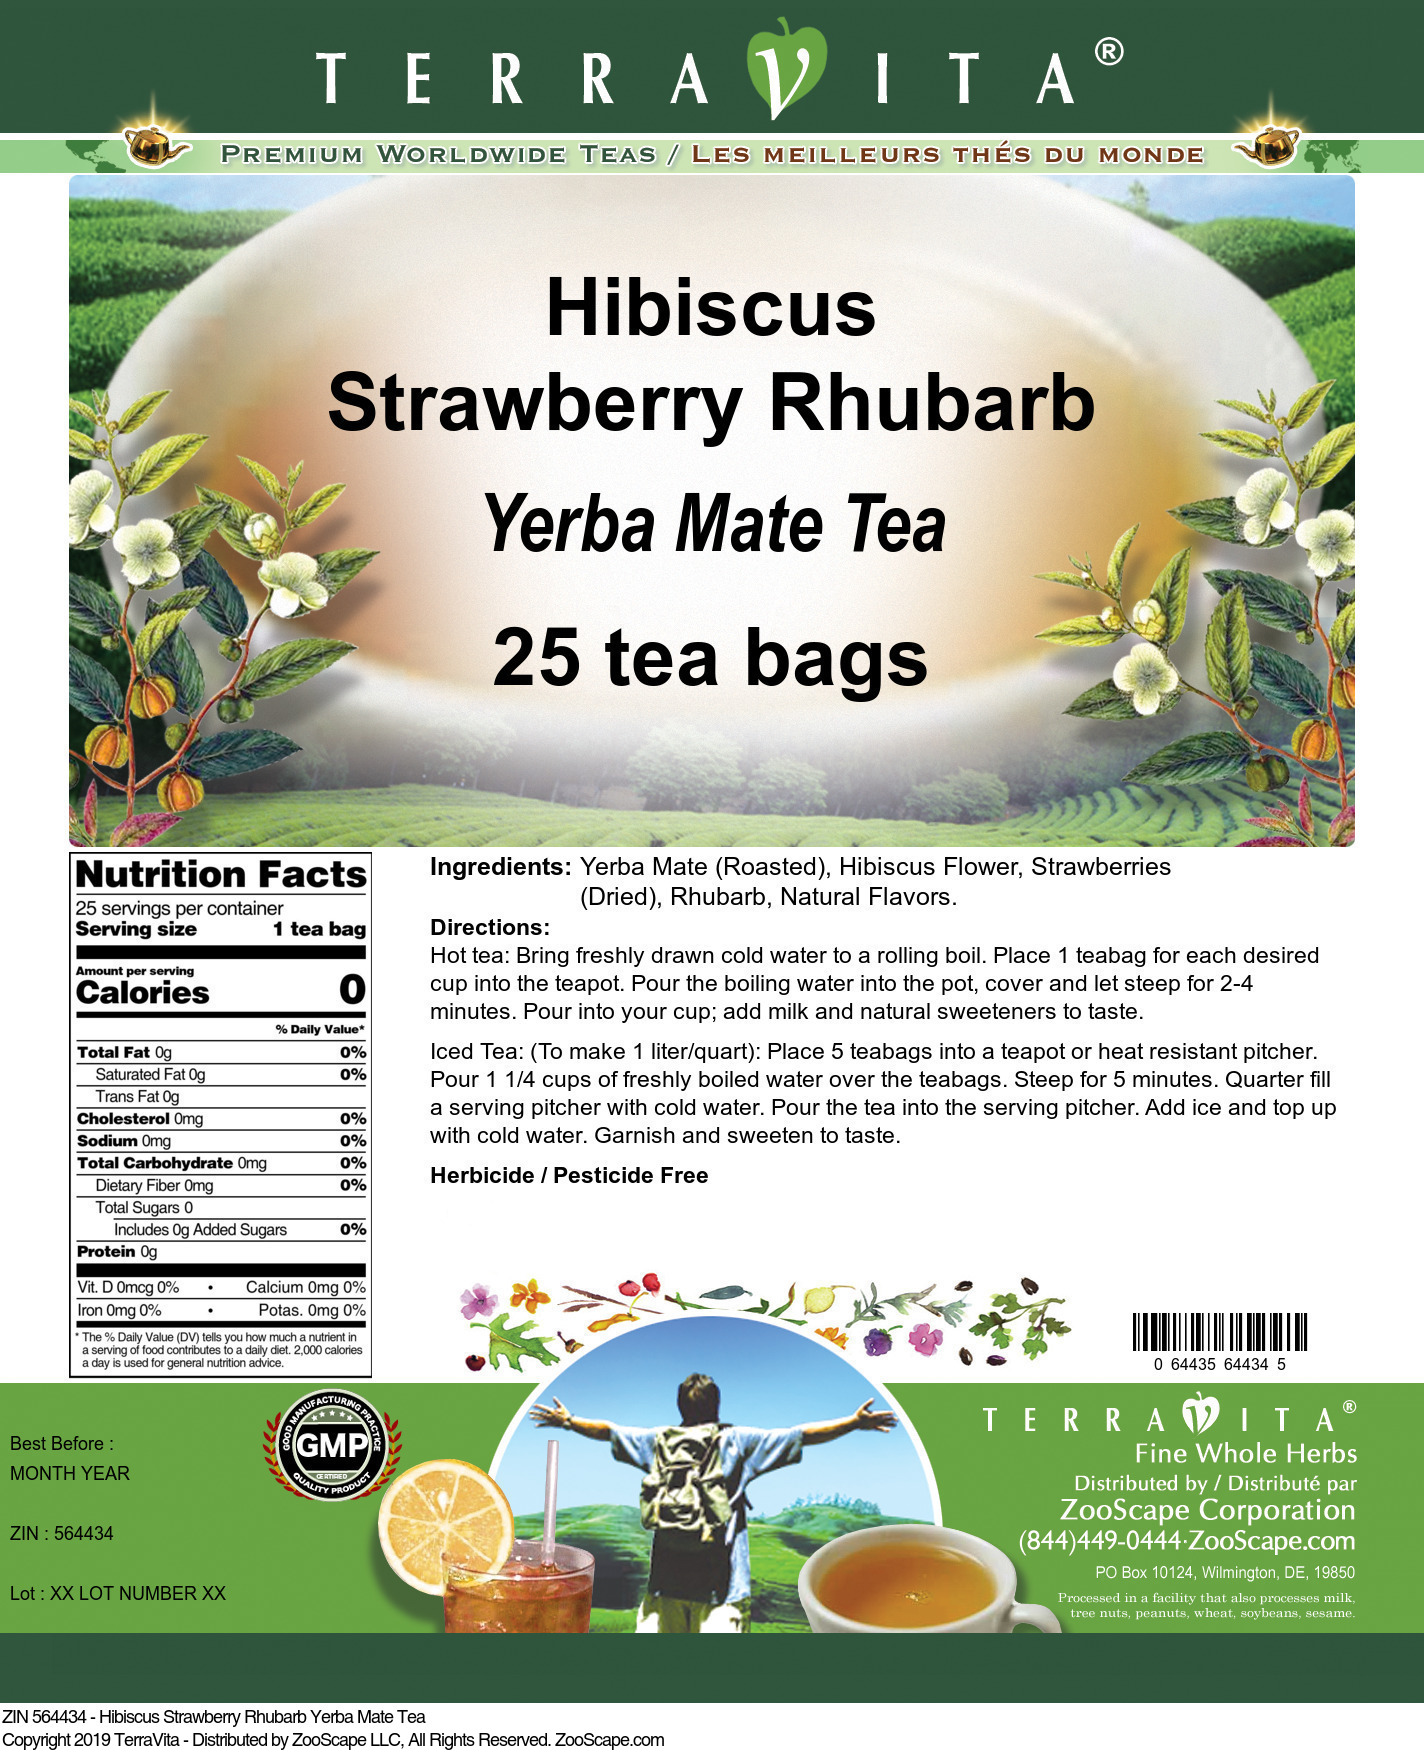 Hibiscus Strawberry Rhubarb Yerba Mate Tea - Label